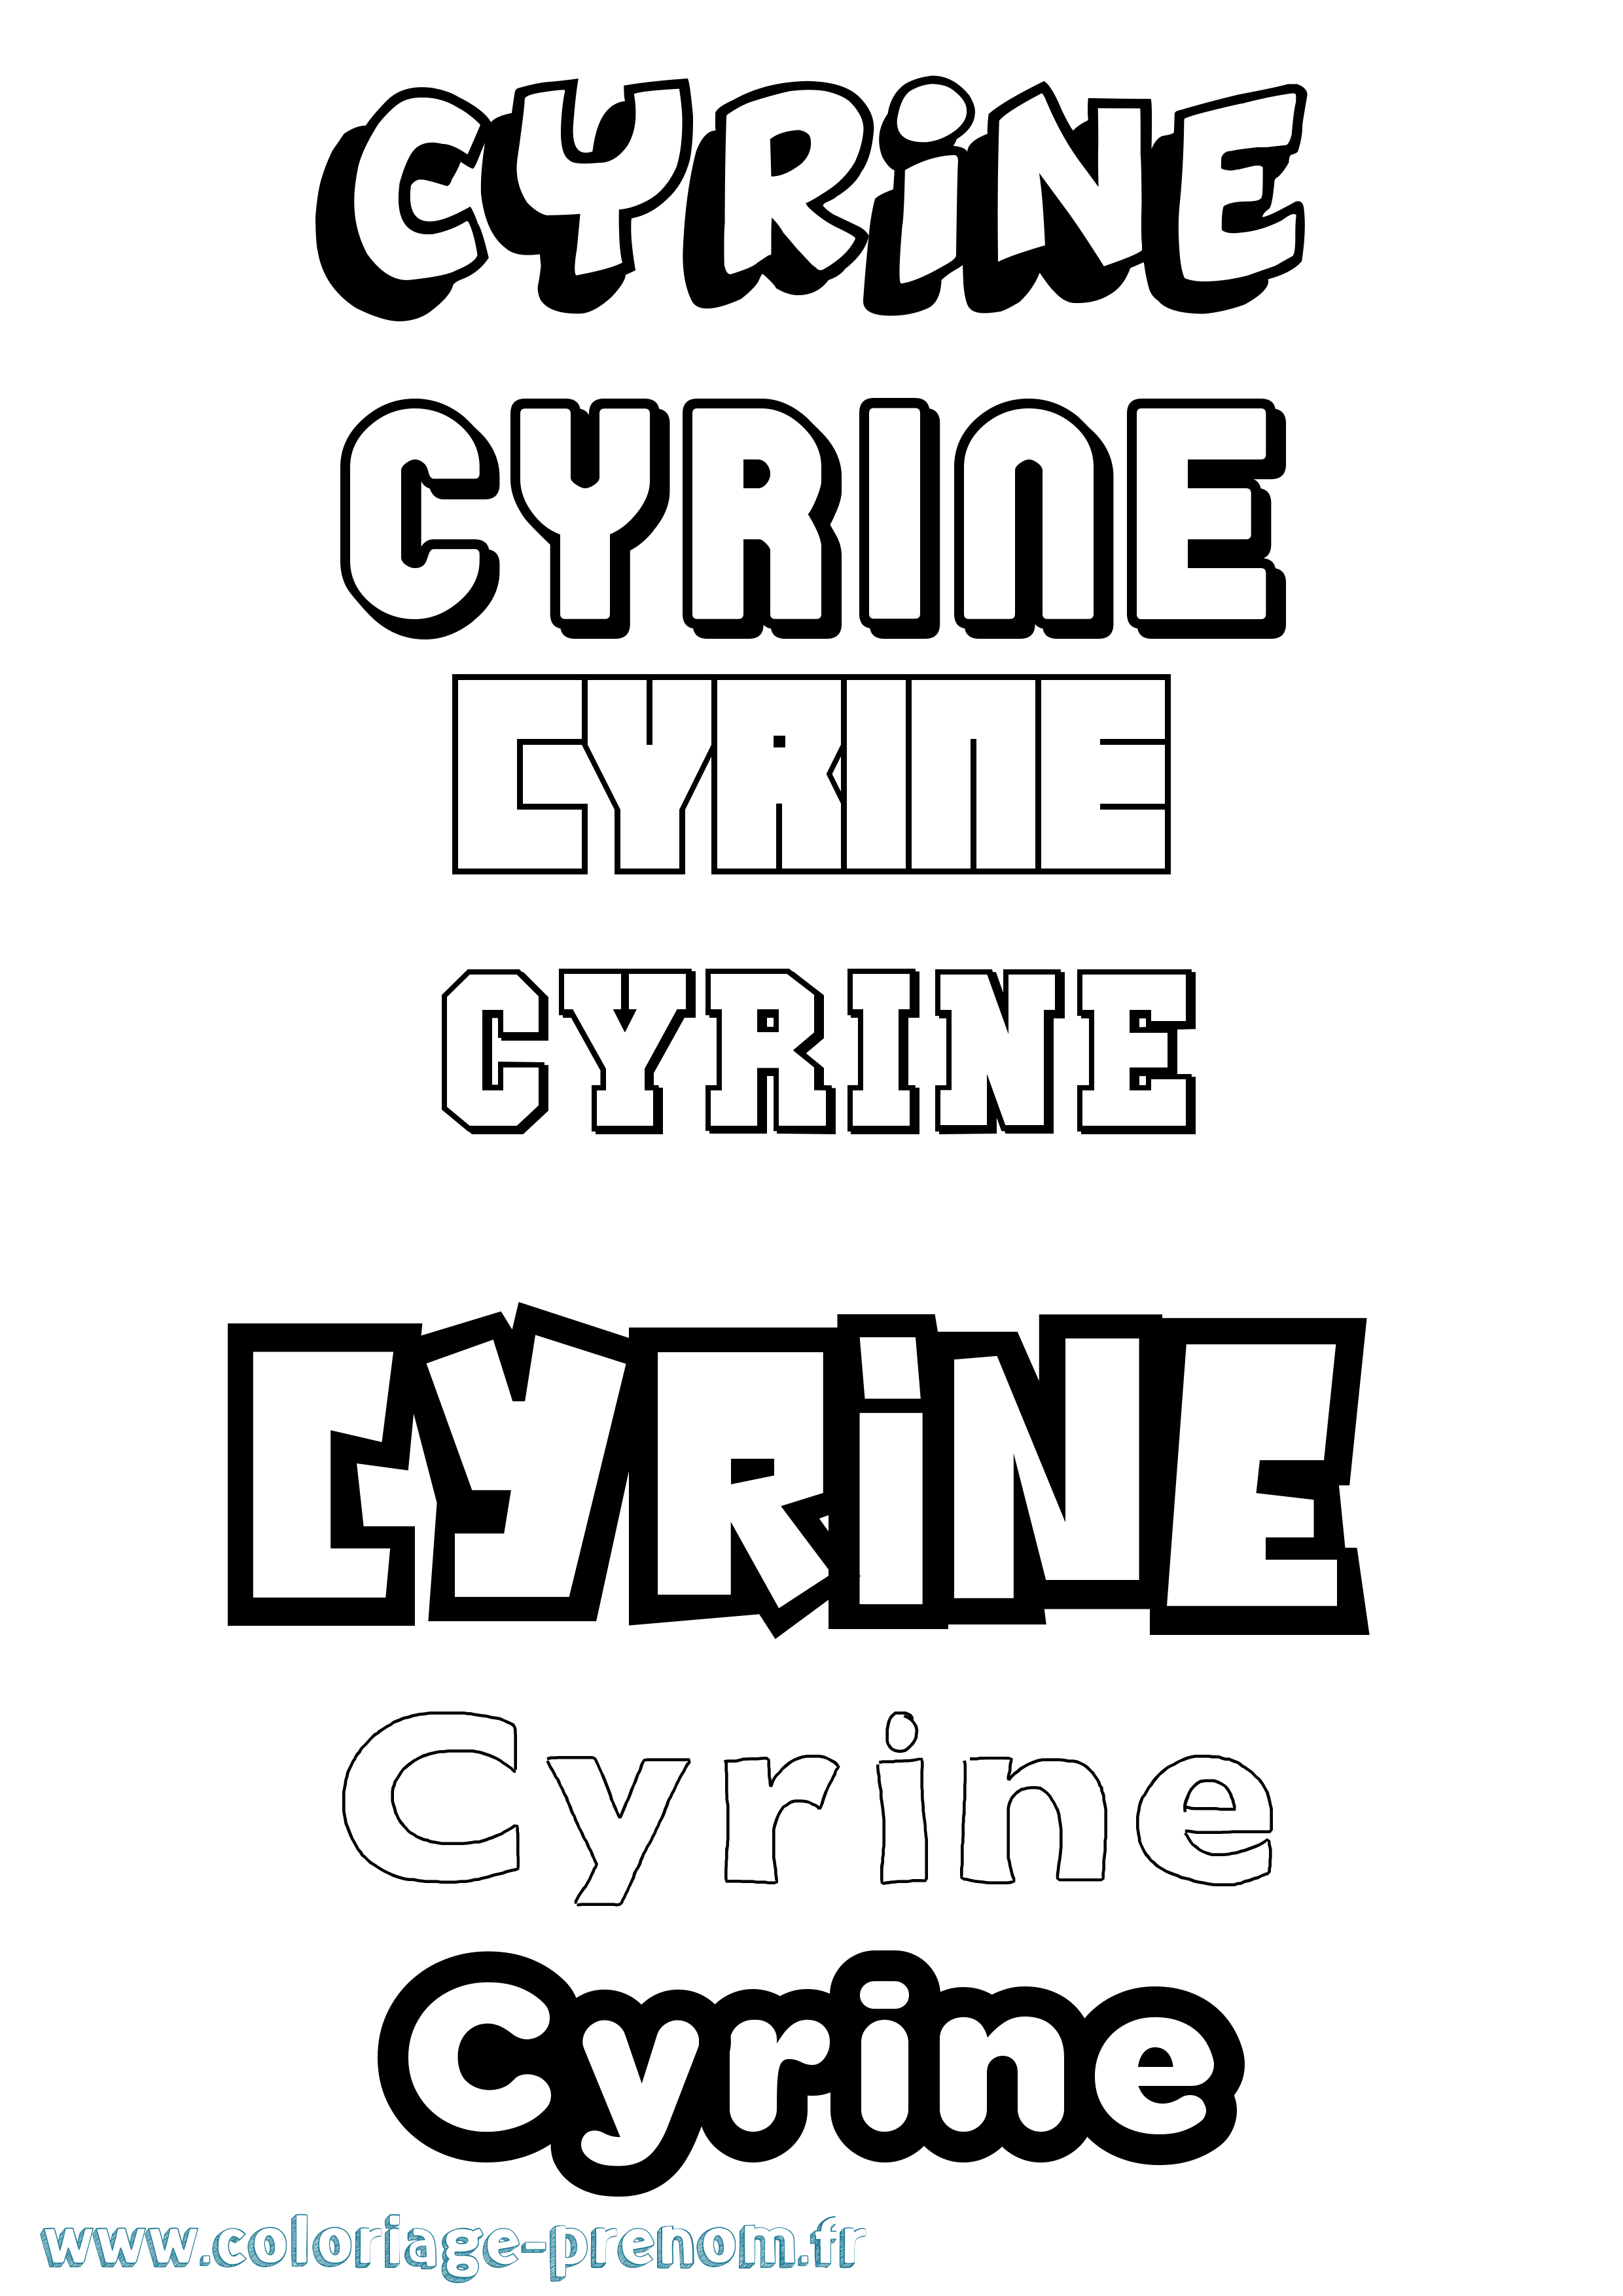 Coloriage prénom Cyrine